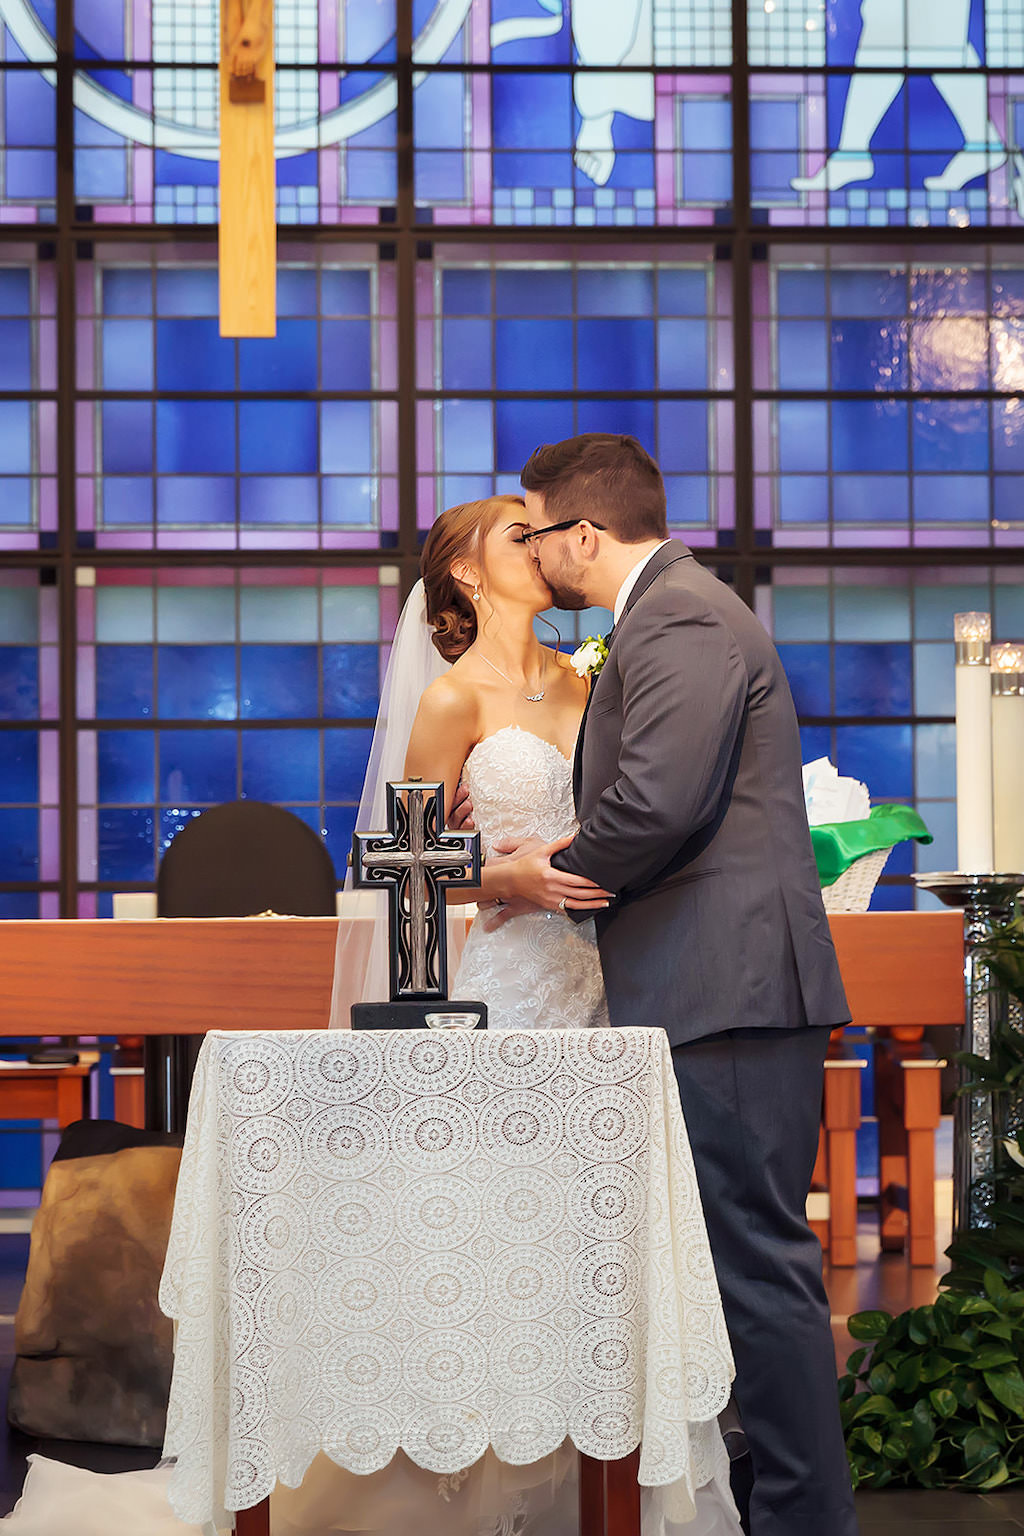 Traditaional Bride and Groom Wedding Ceremony Portrait | Tampa Bay Wedding Venue Saint Paul's Catholic Church